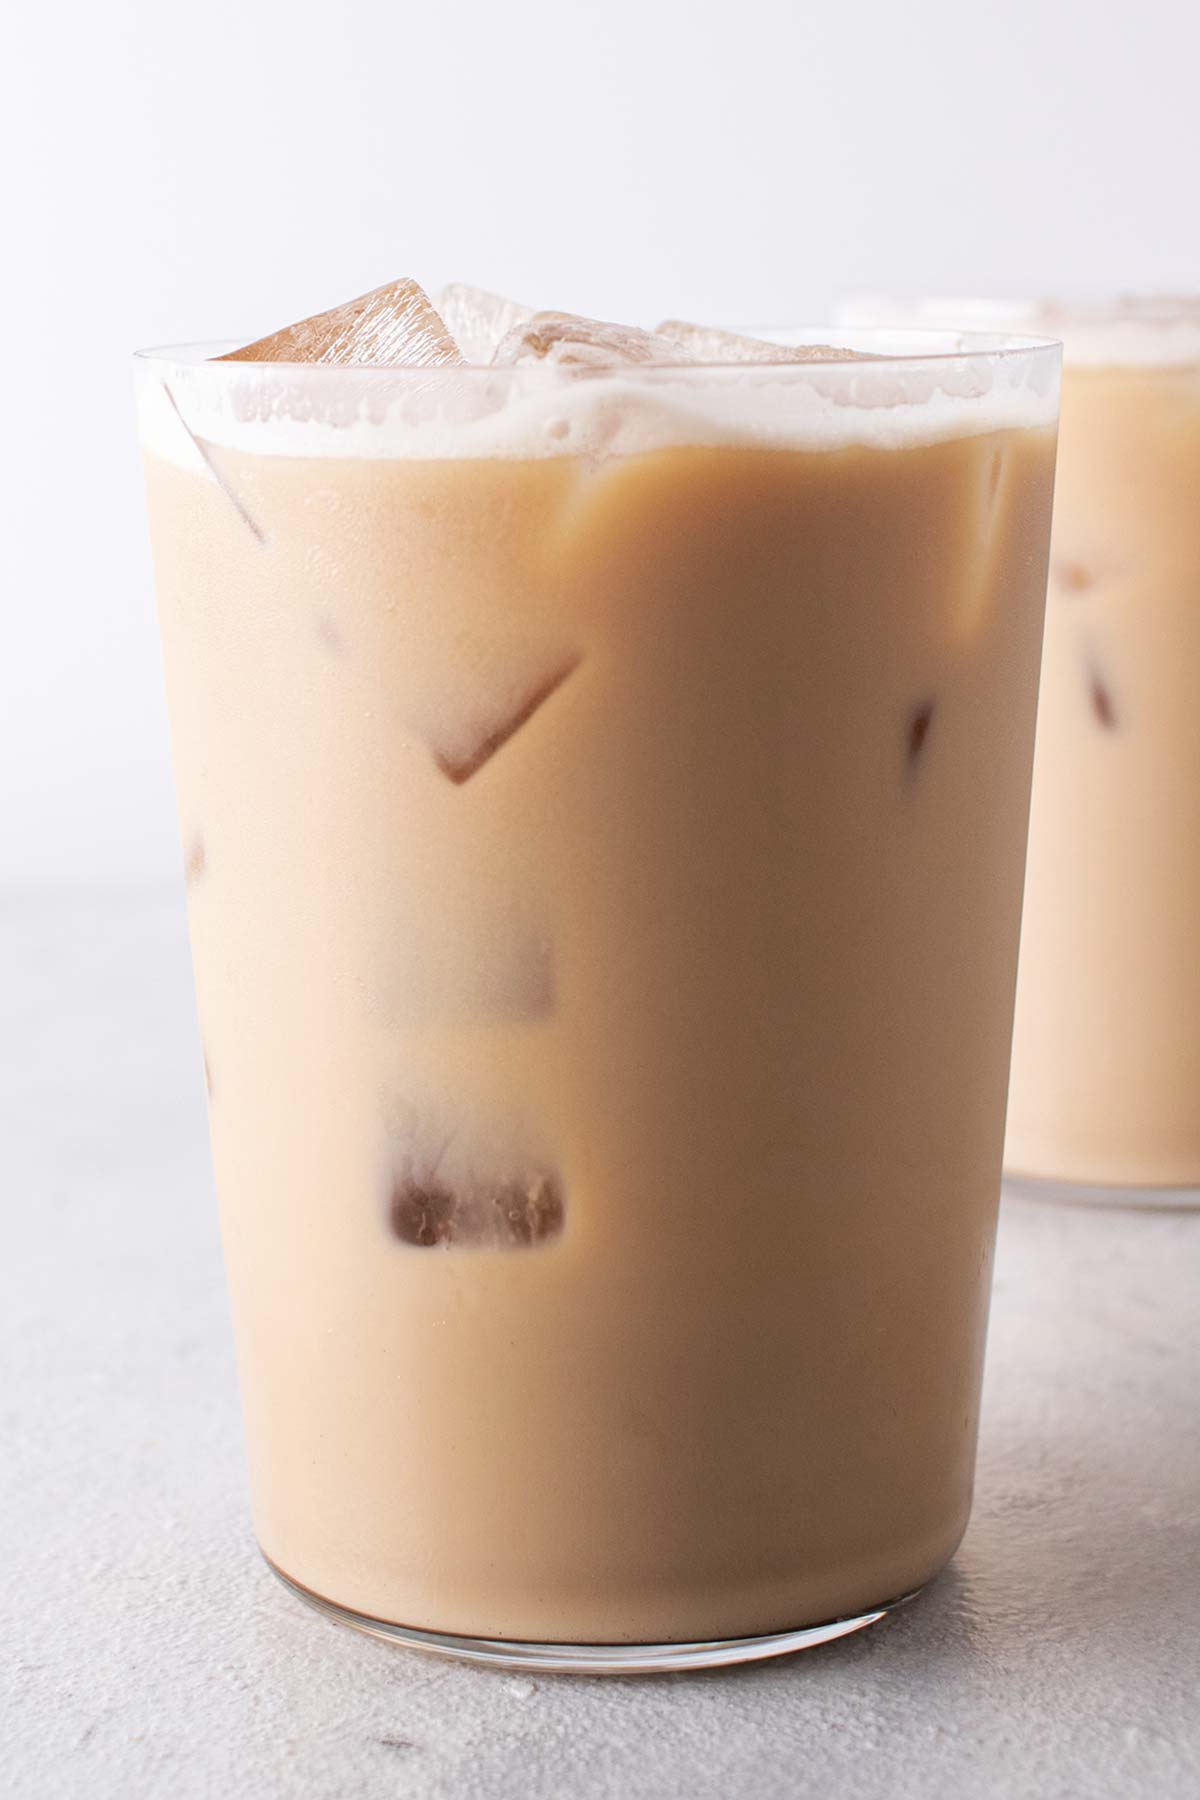 Starbucks Iced Vanilla Latte in a glass.